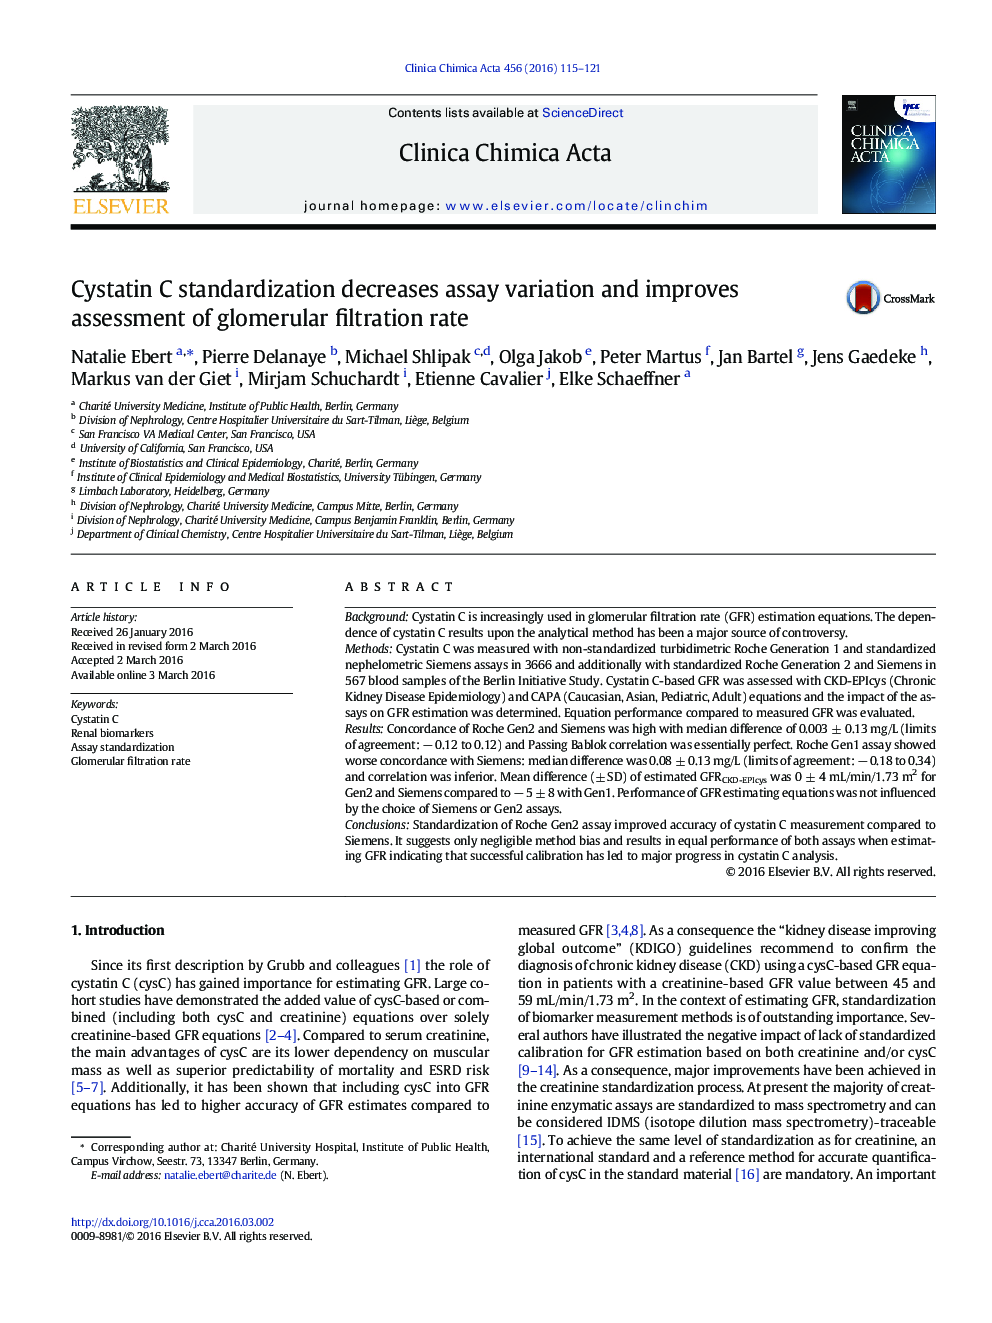 Cystatin C standardization decreases assay variation and improves assessment of glomerular filtration rate